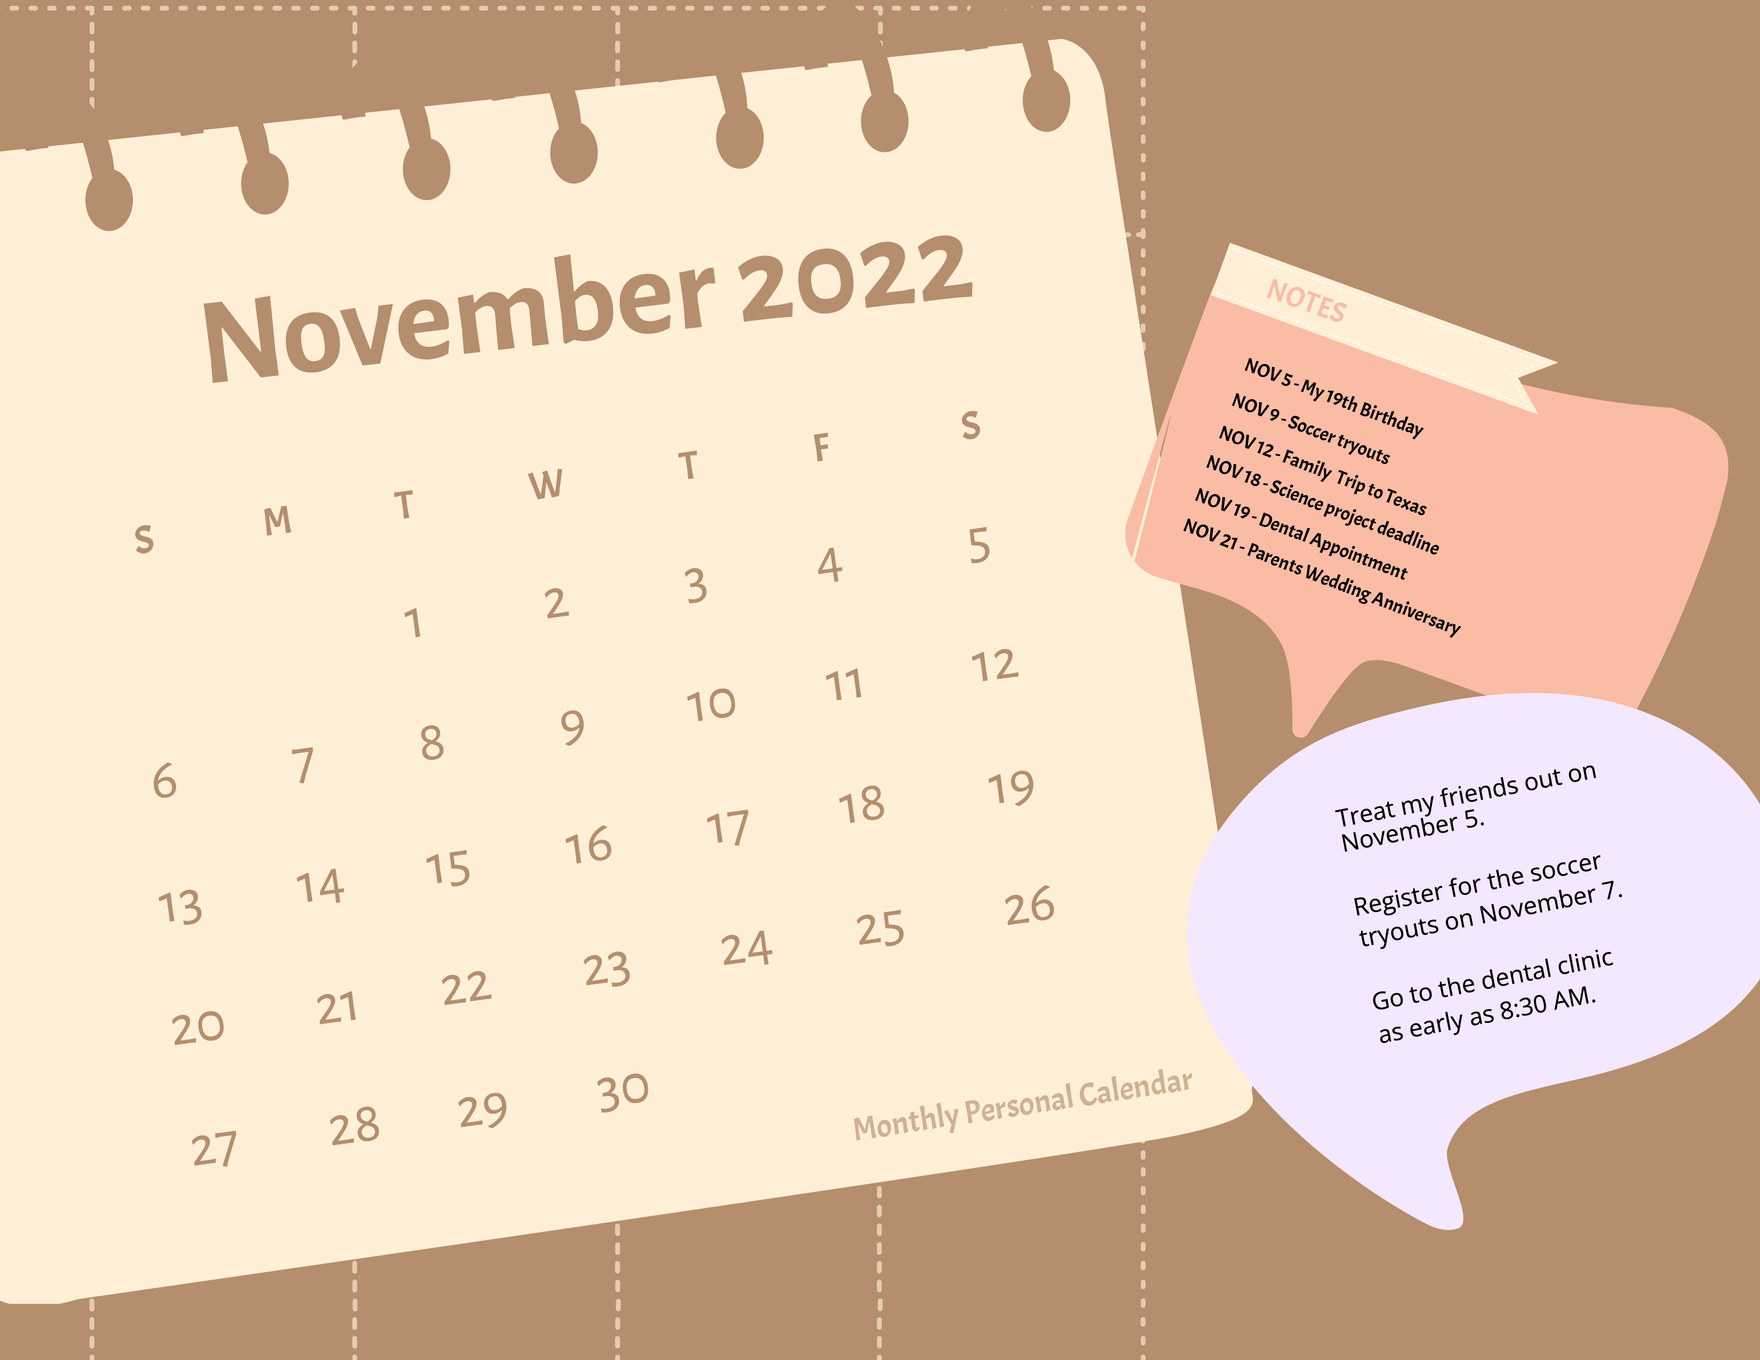 November 2022 Monthly Calendar Template